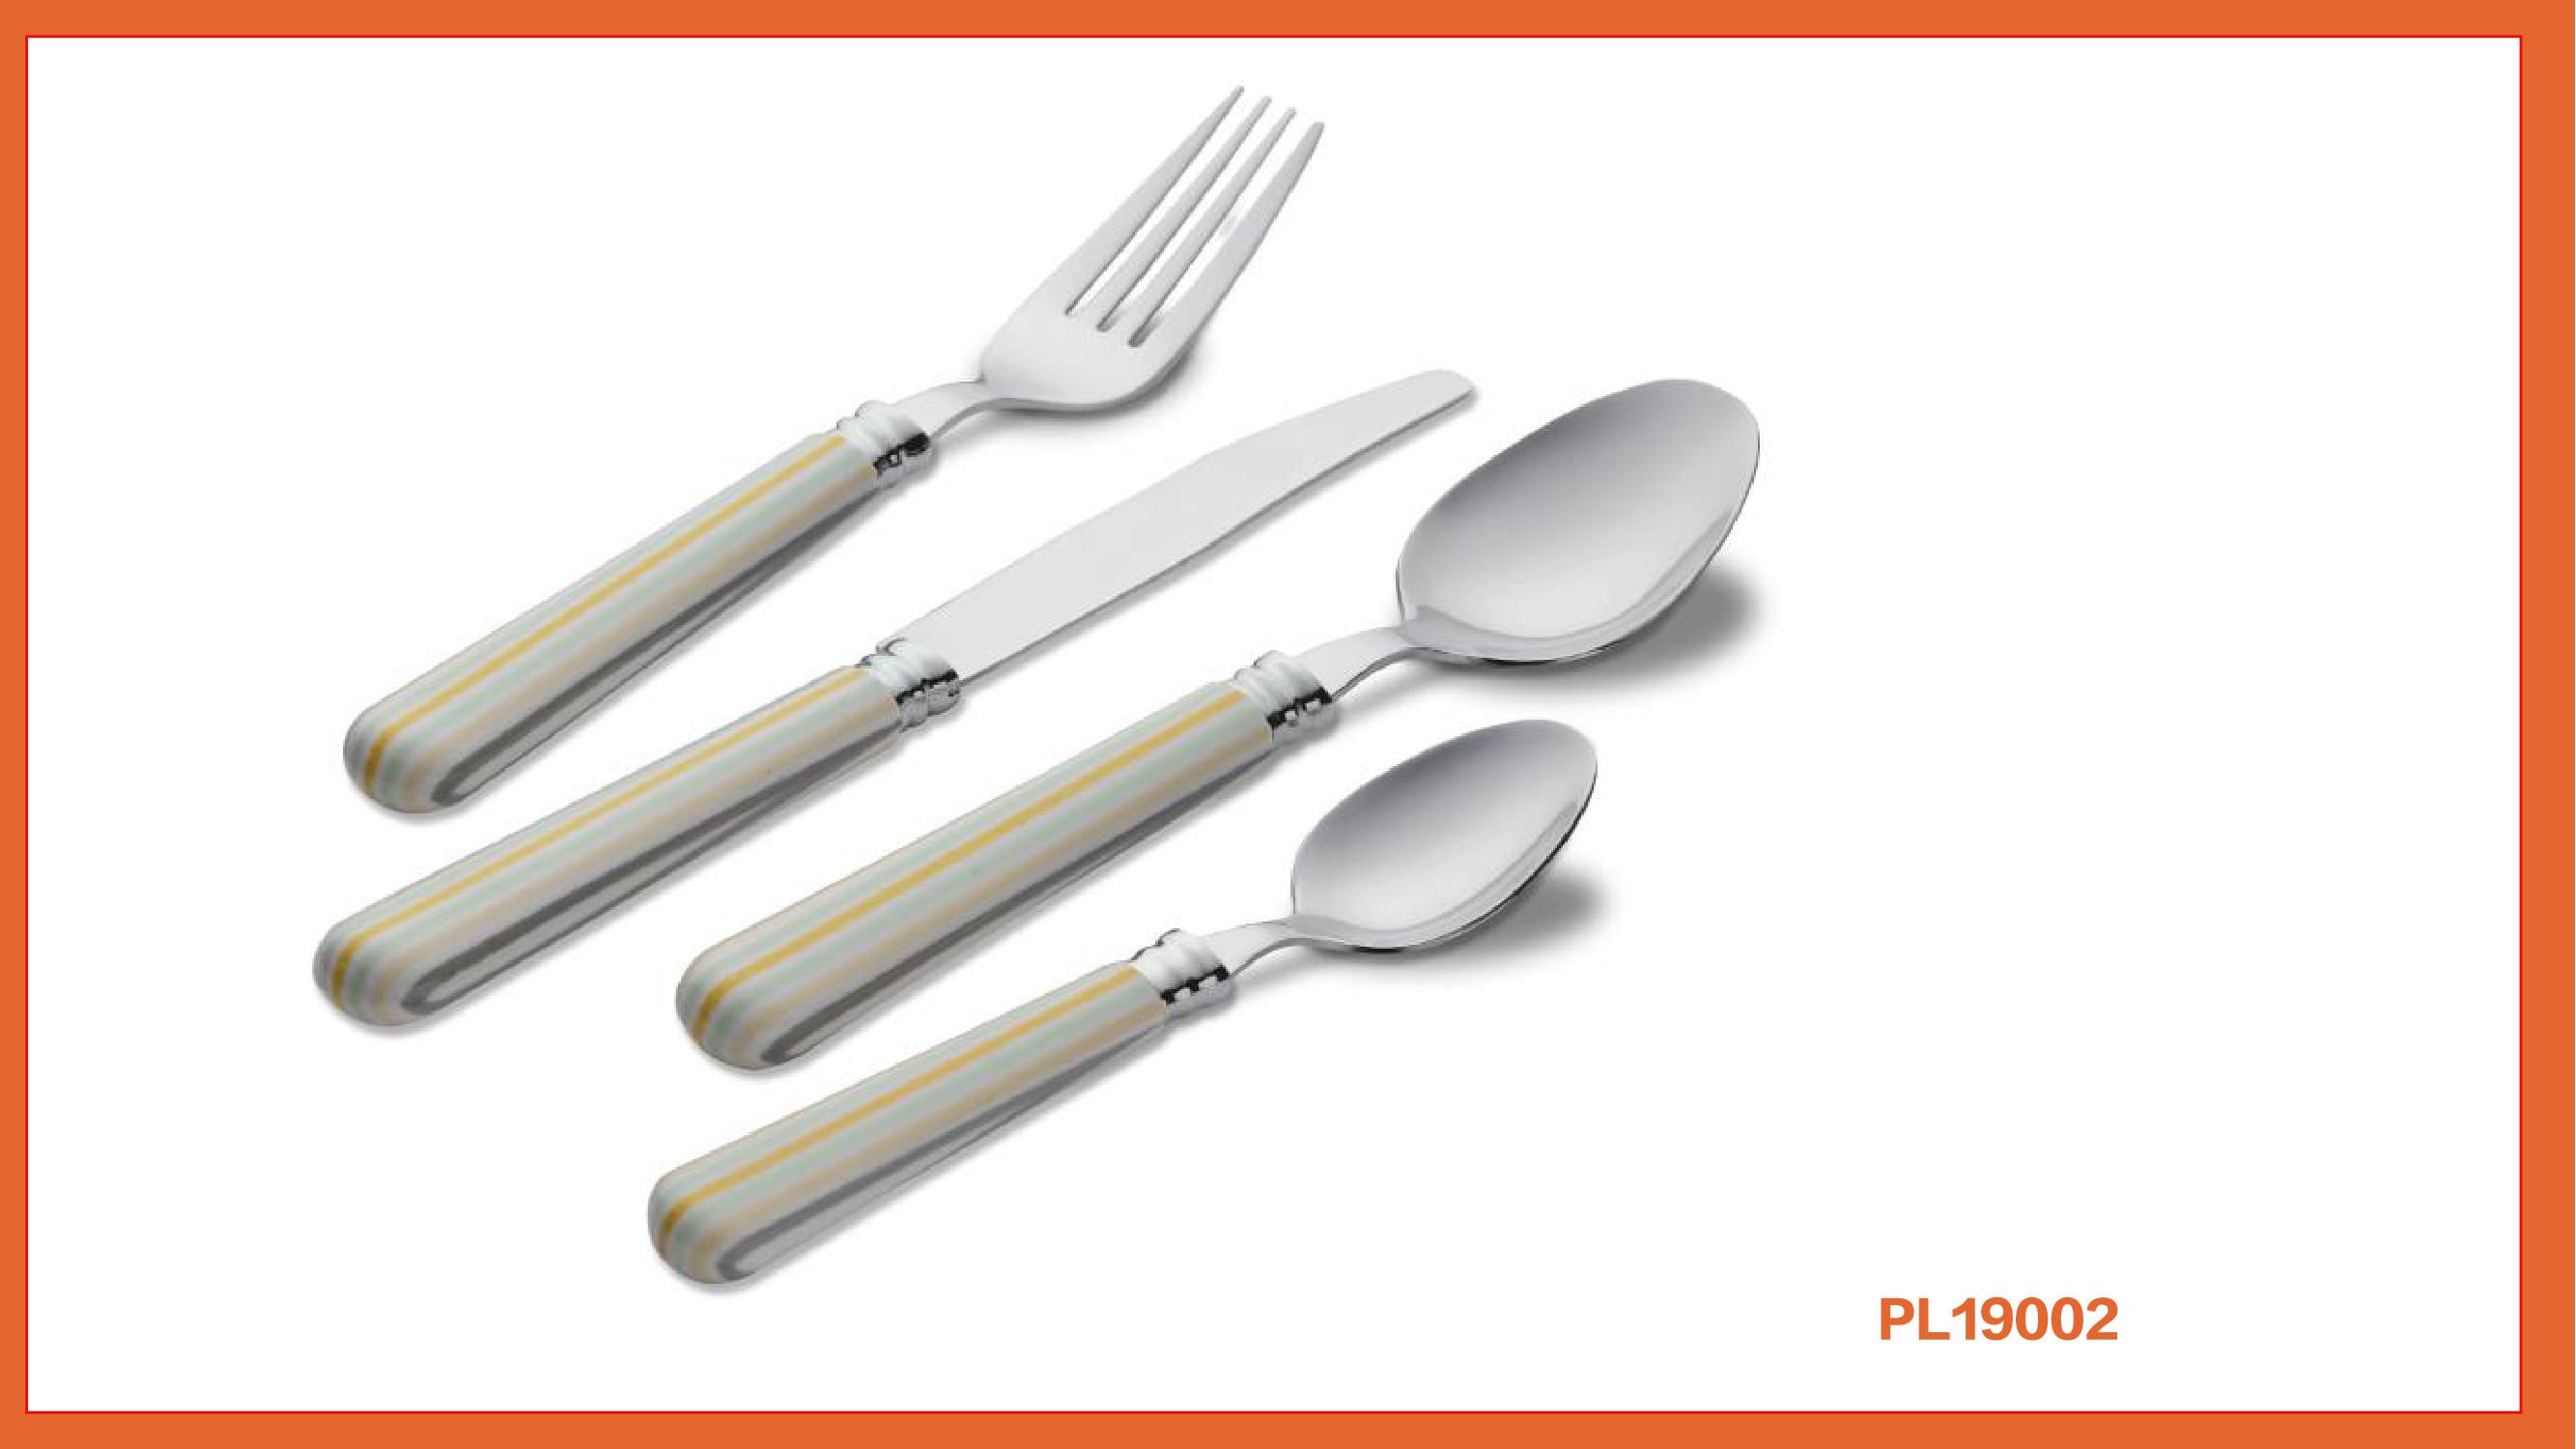 catalogue of plastic handle cutlery_3.jpg